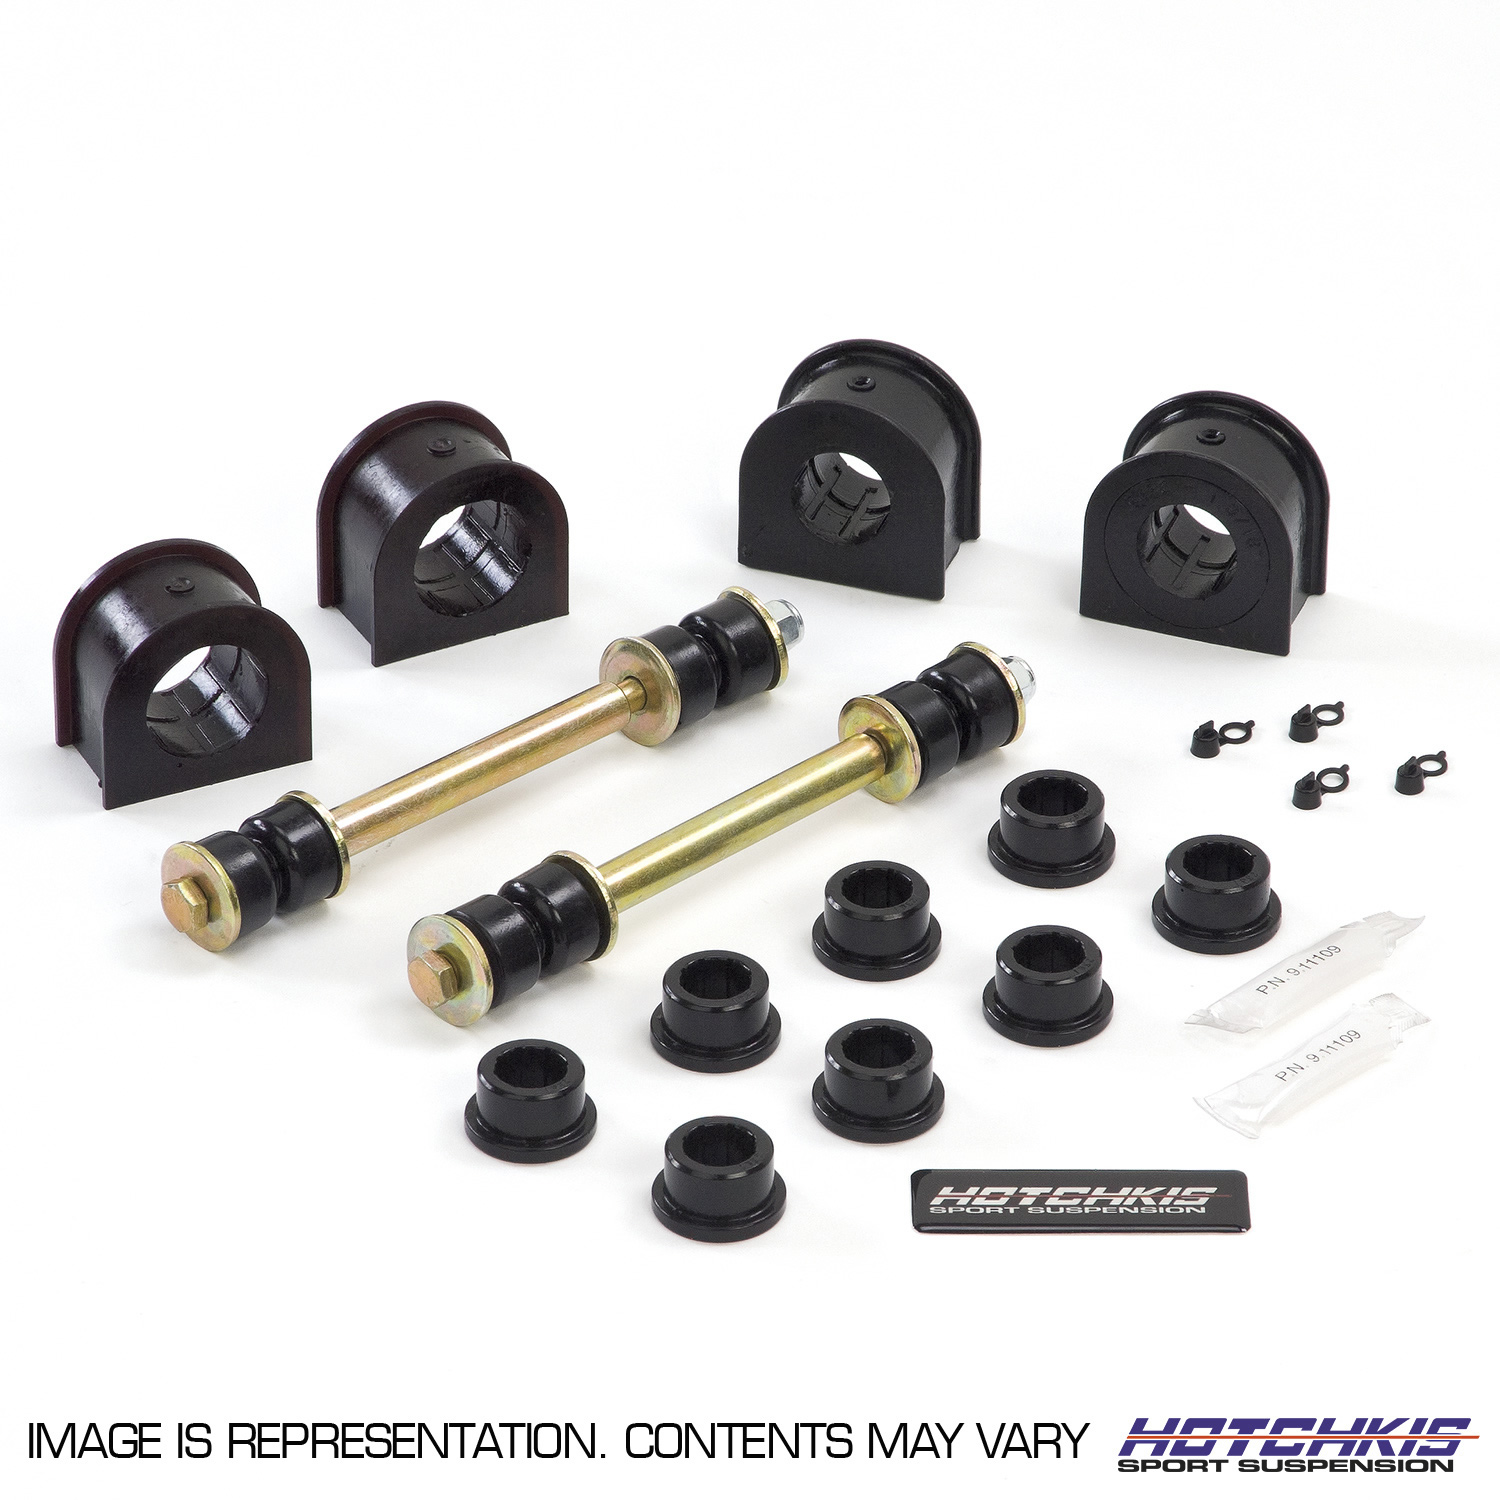 Rebuild Service Kit For Hotchkis Sport Suspension Product Kit 2202